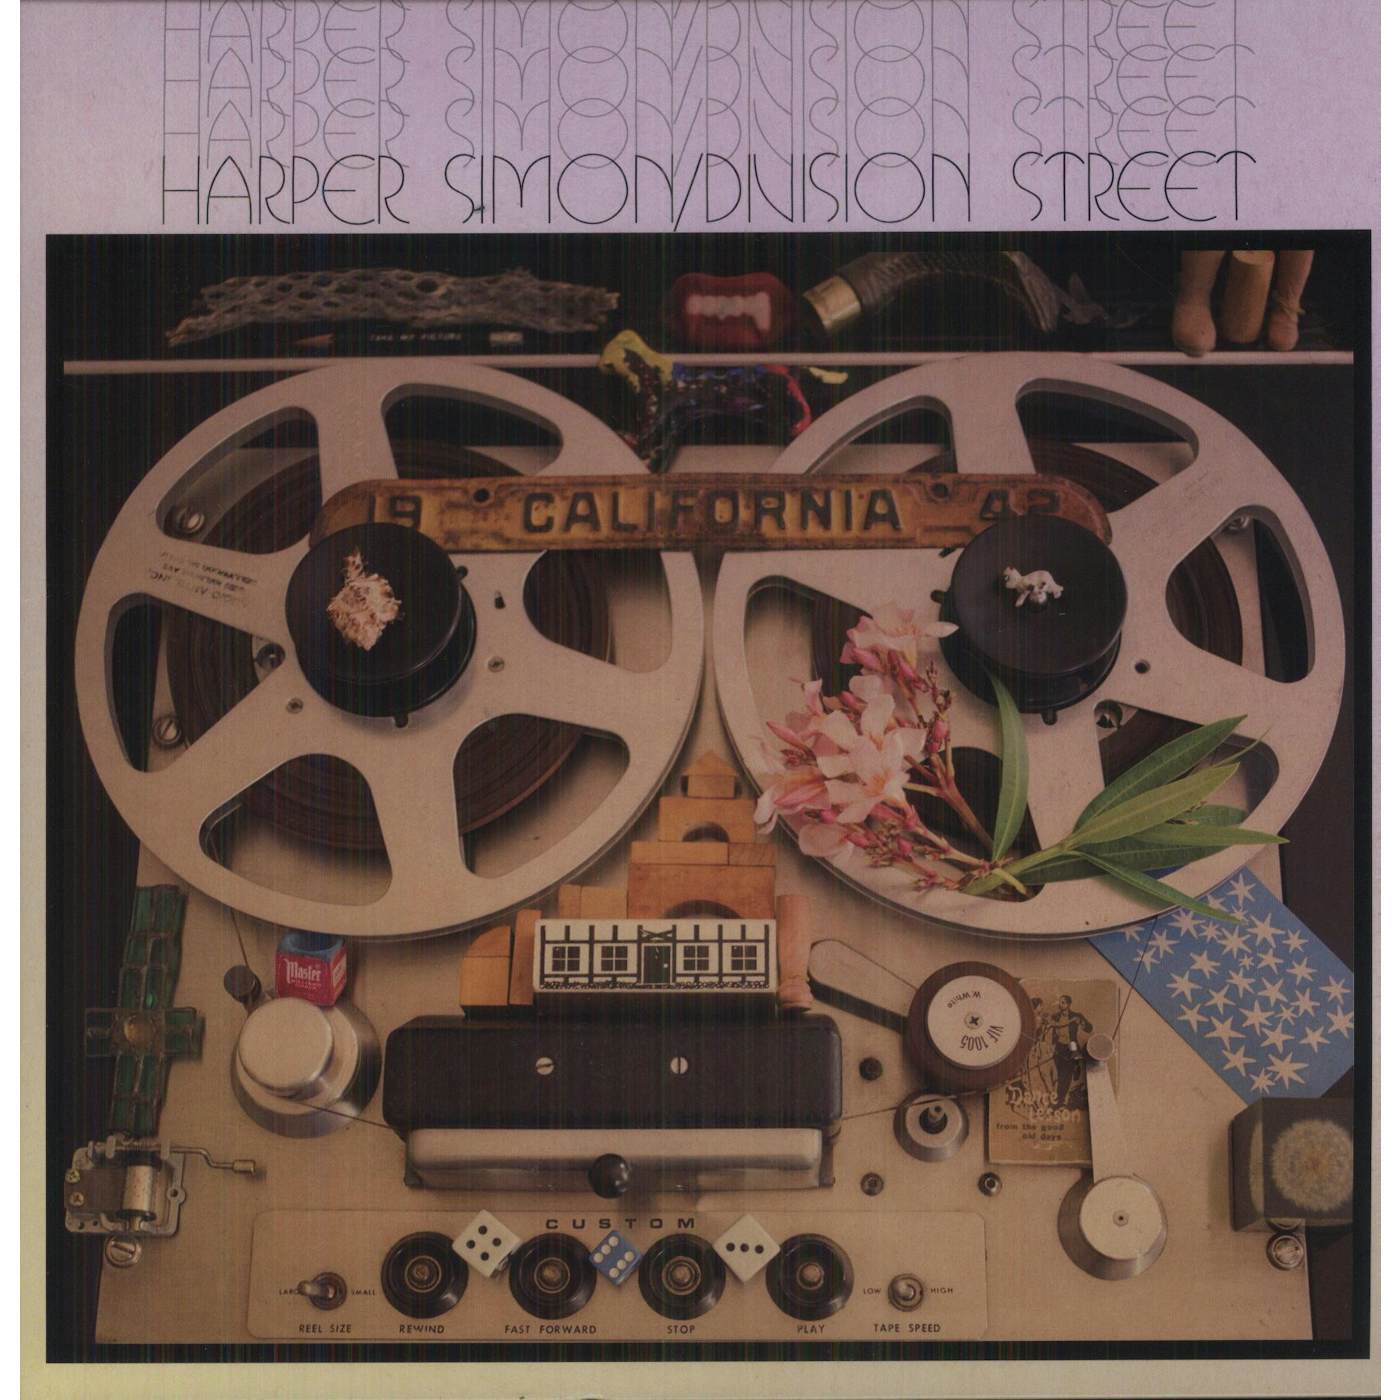 Harper Simon Division Street Vinyl Record